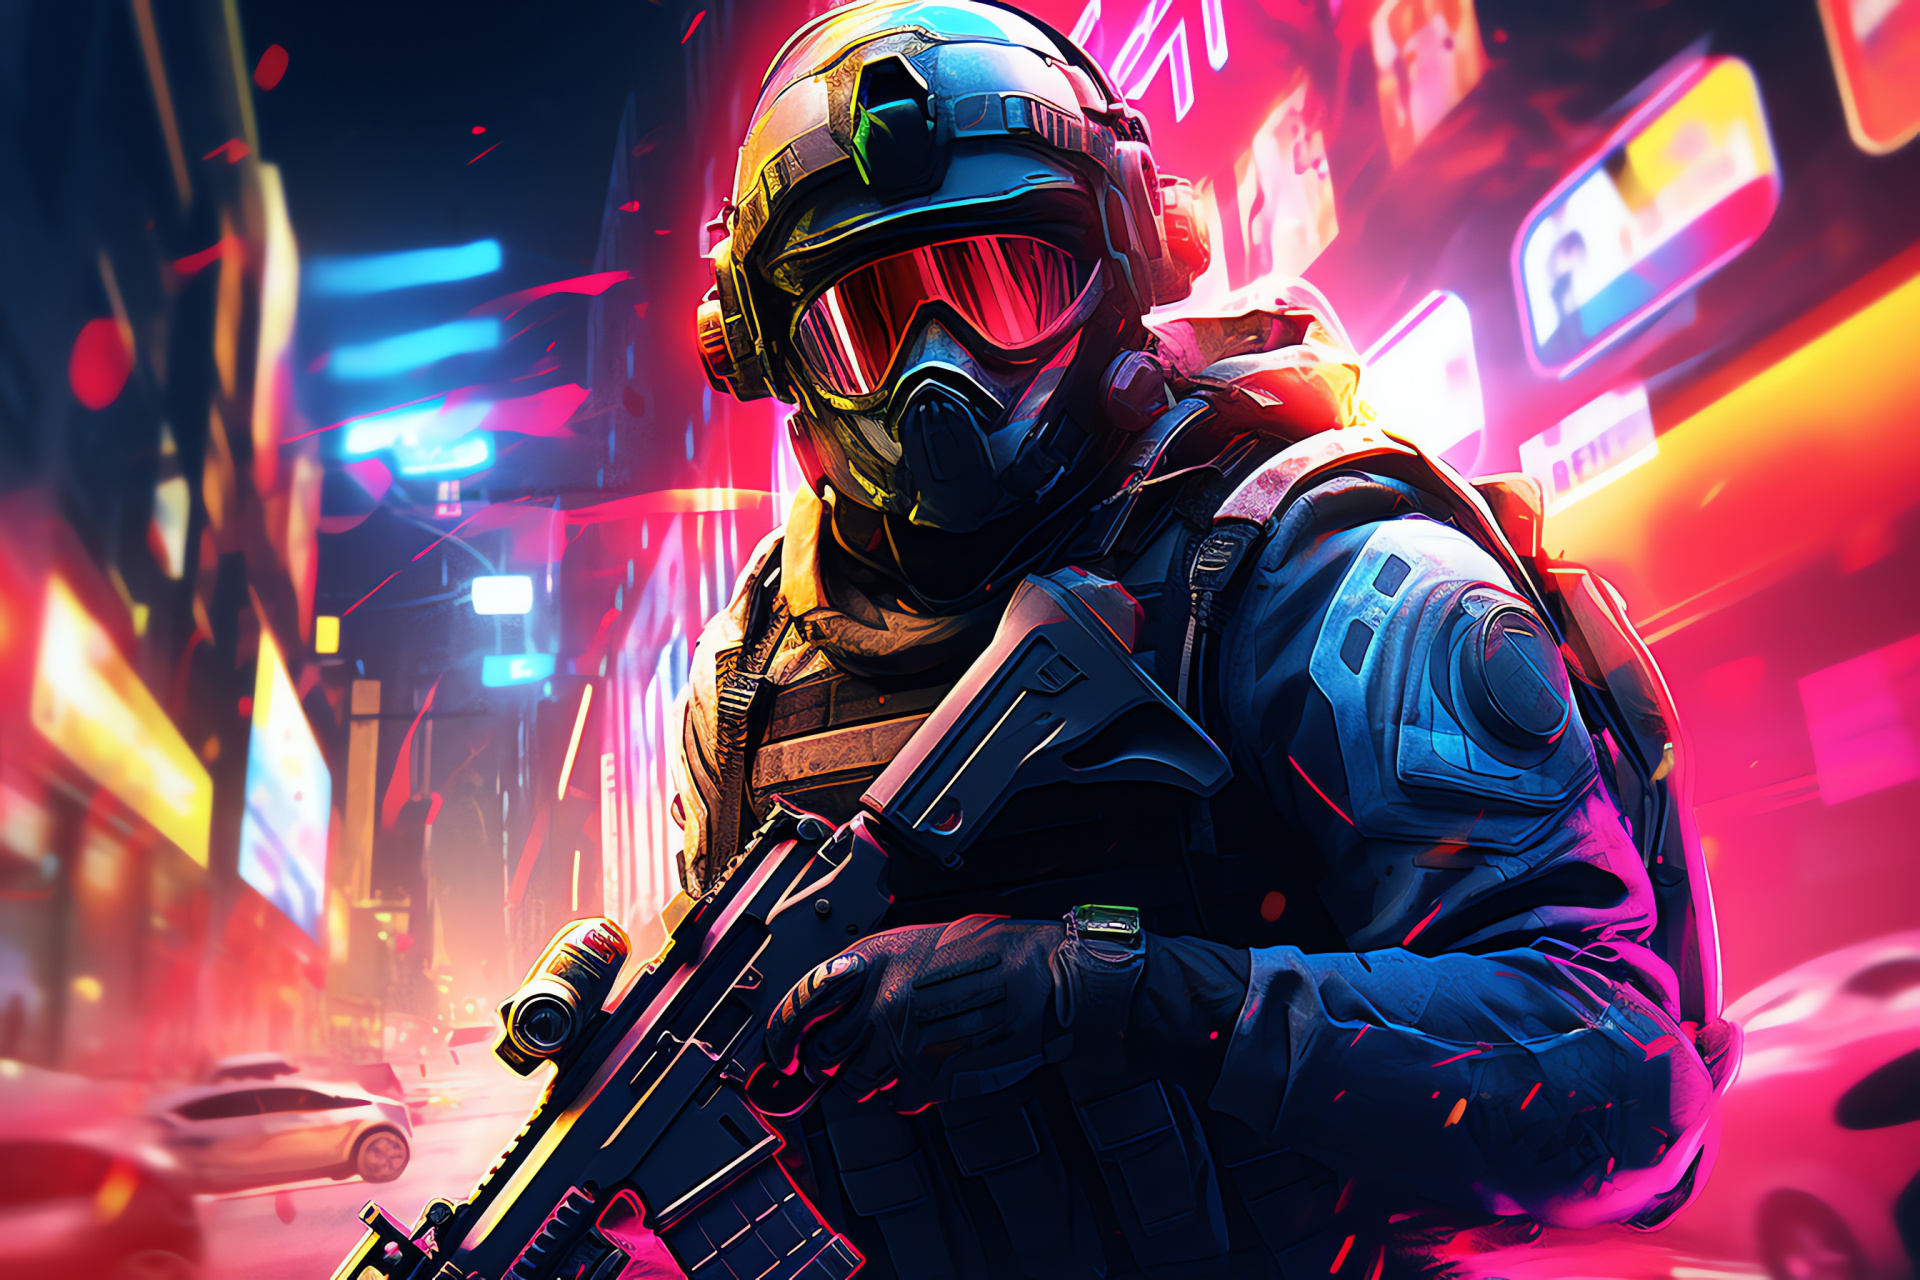 Point Blank 2018, Urban warfare scenario, Nighttime cityscape gaming, Skyscraper backdrop, Intense shooter action, HD Desktop Wallpaper